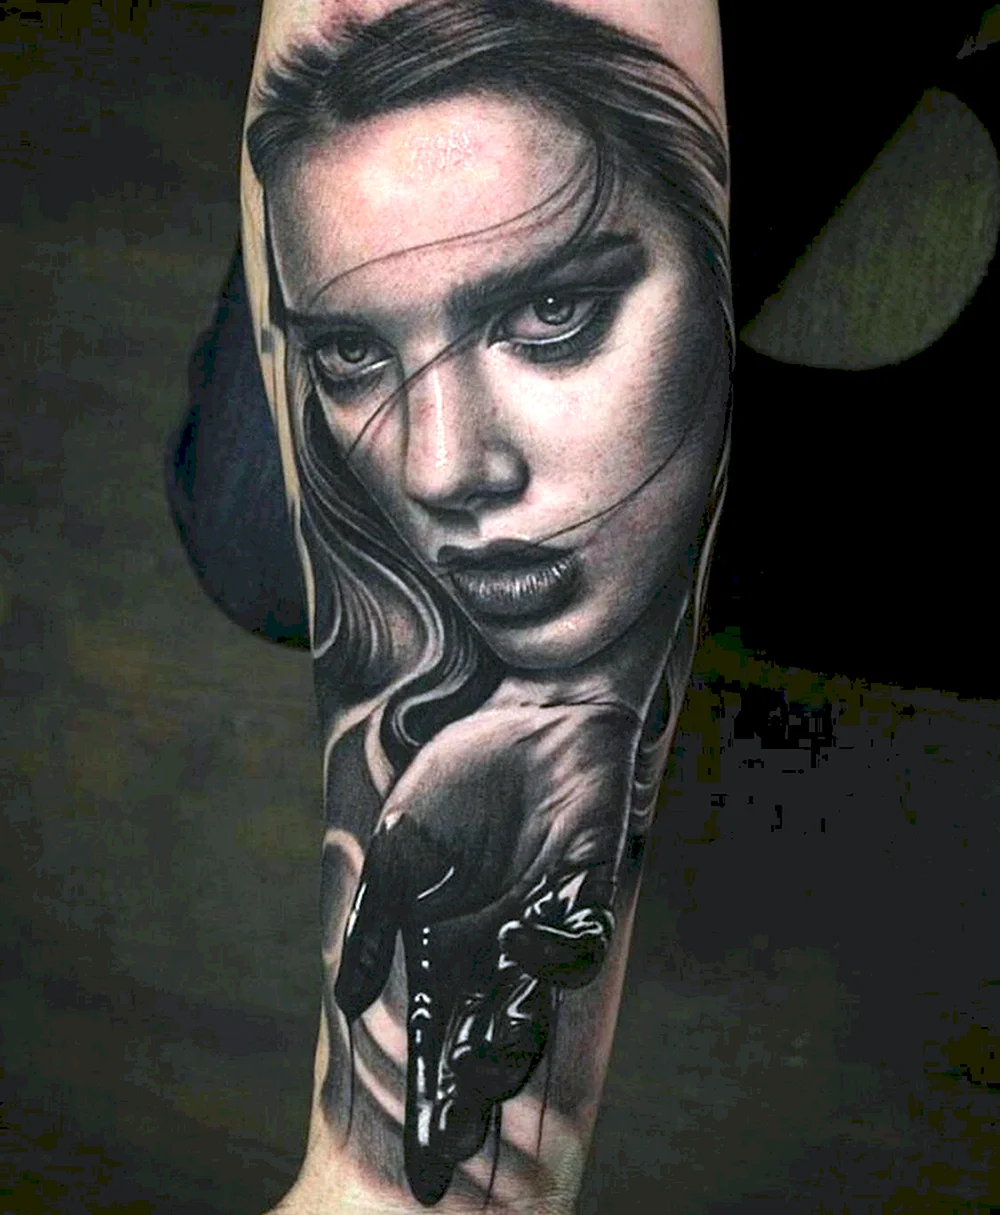 Tattoo girl portrait